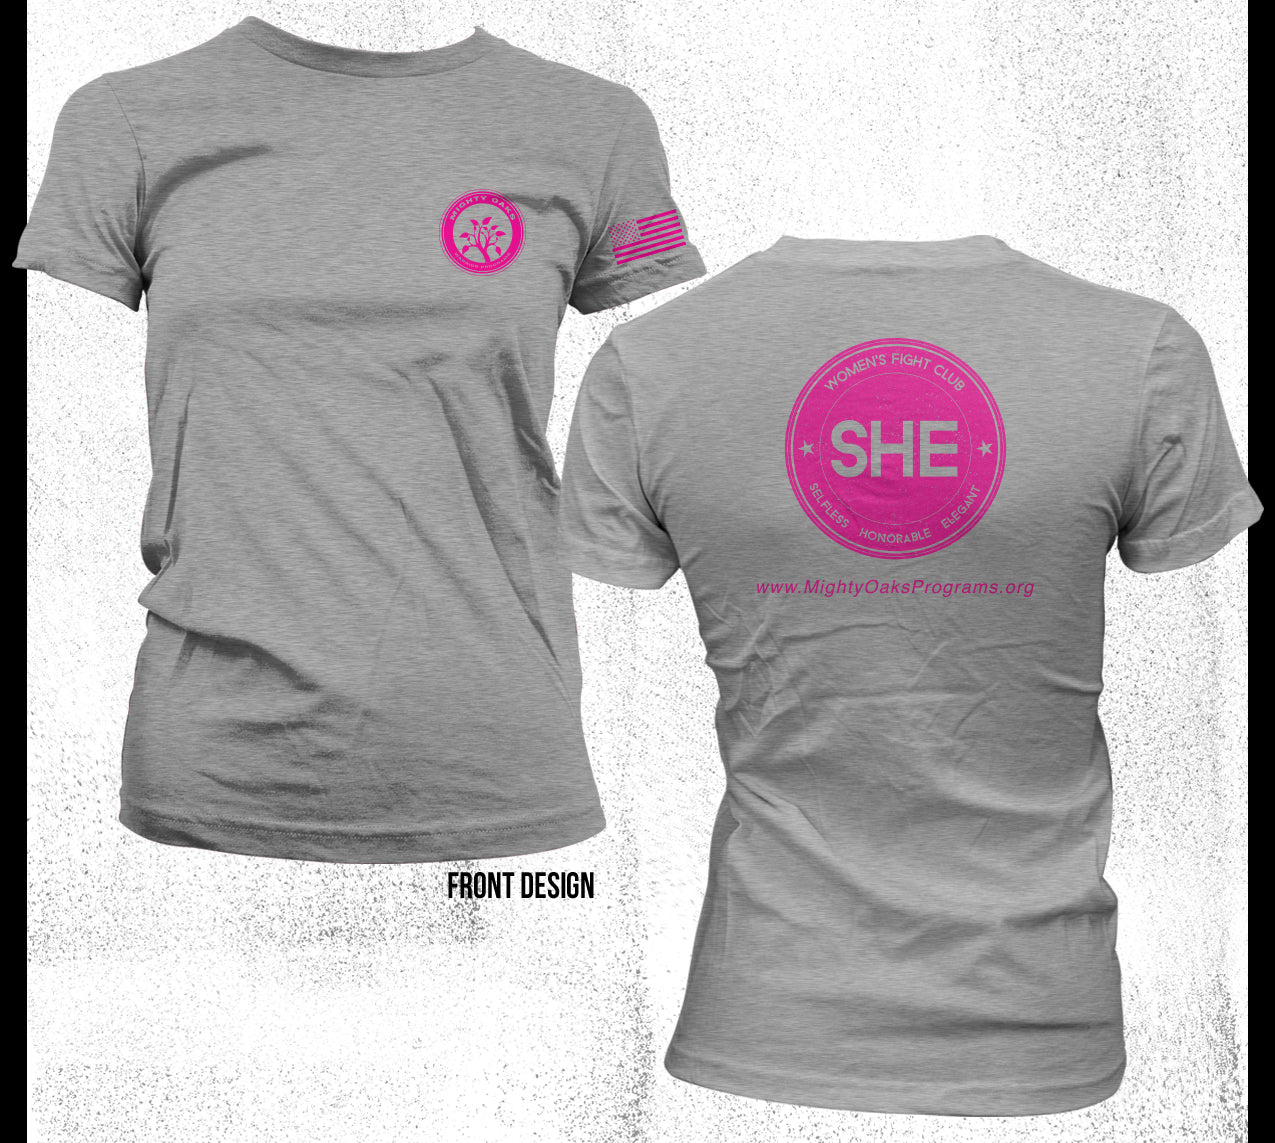 Vintage logo Mighty Oaks T-Shirt - Women's (Pink Logo)